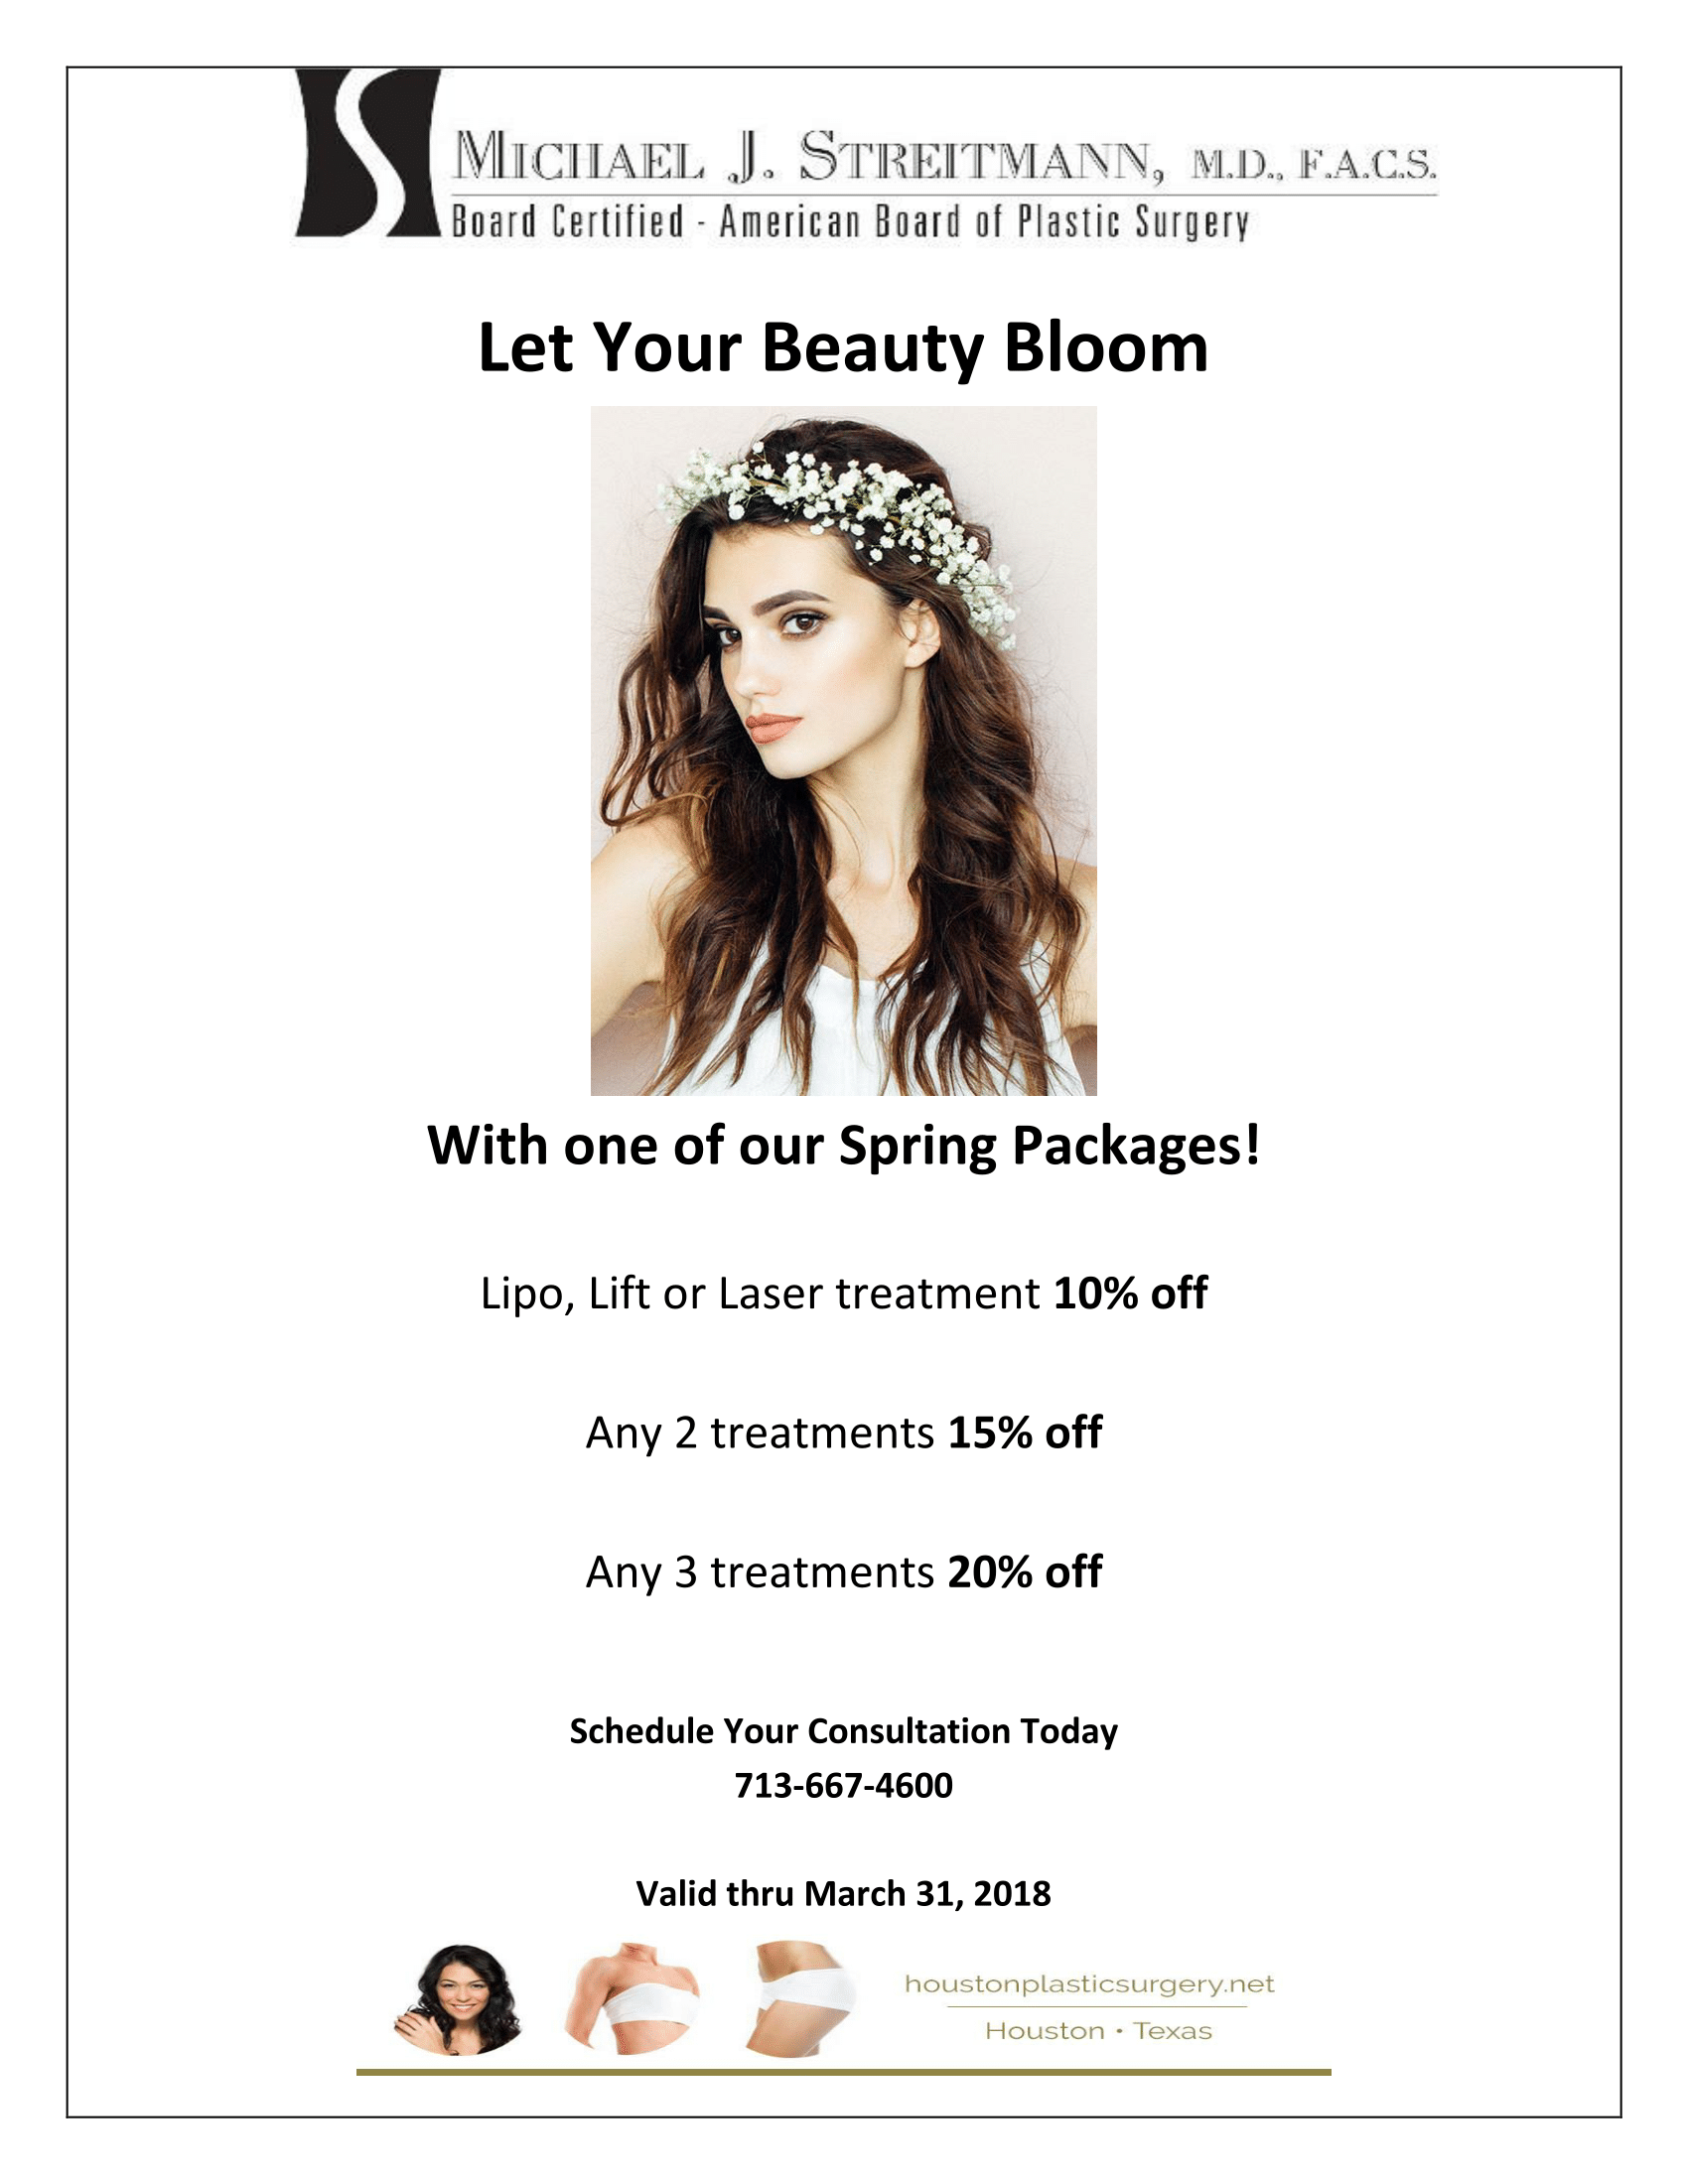 Let Your Beauty Bloom - Houston Plastic Surgery